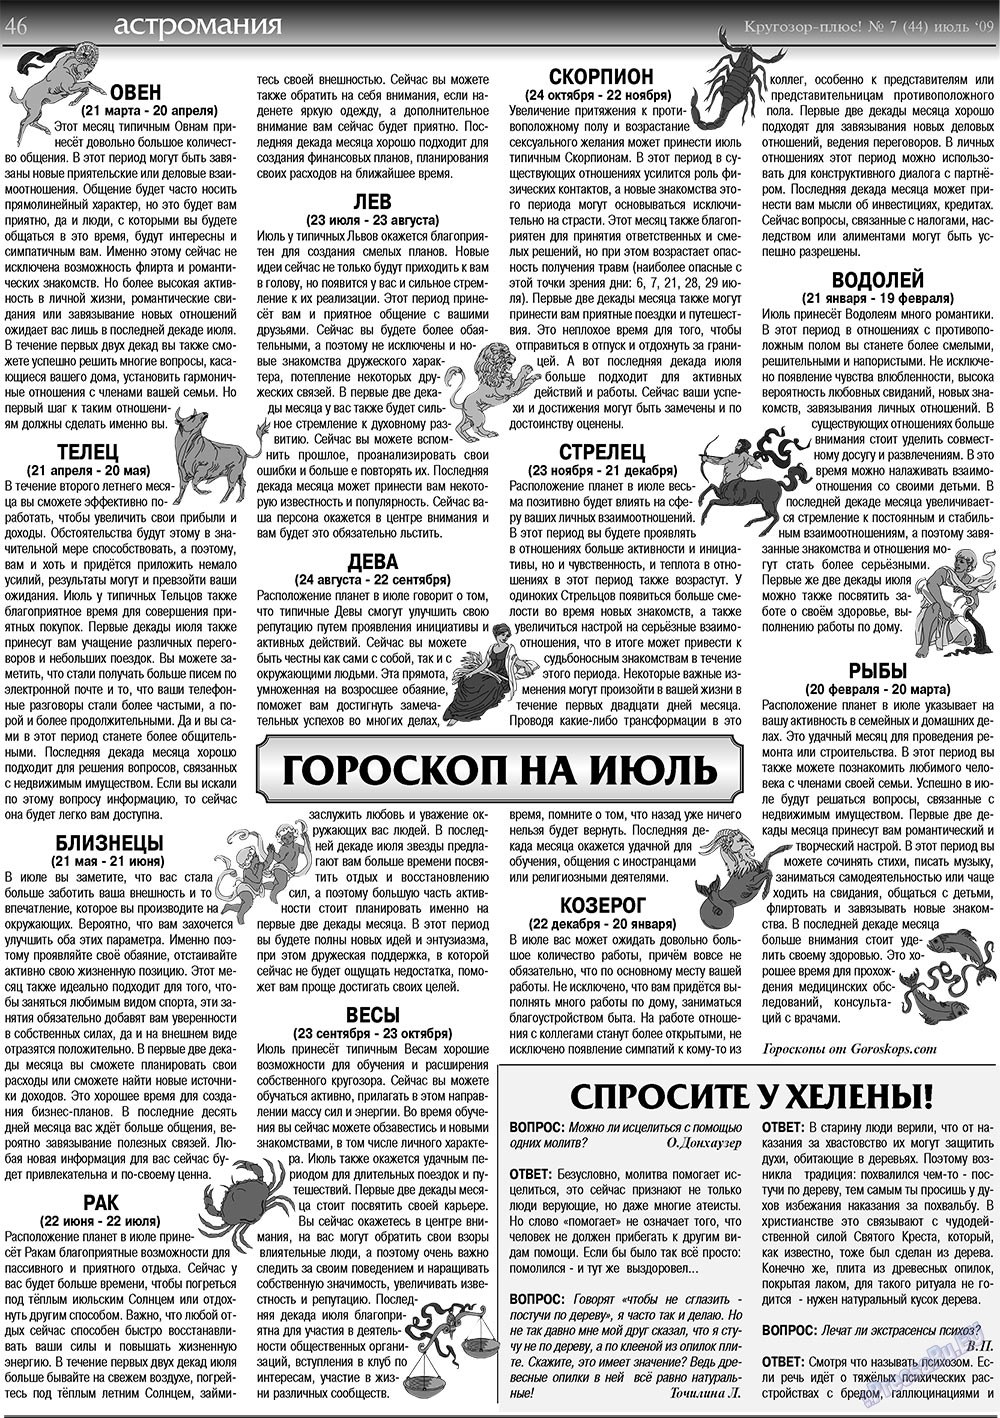 Кругозор плюс! (газета). 2009 год, номер 7, стр. 46